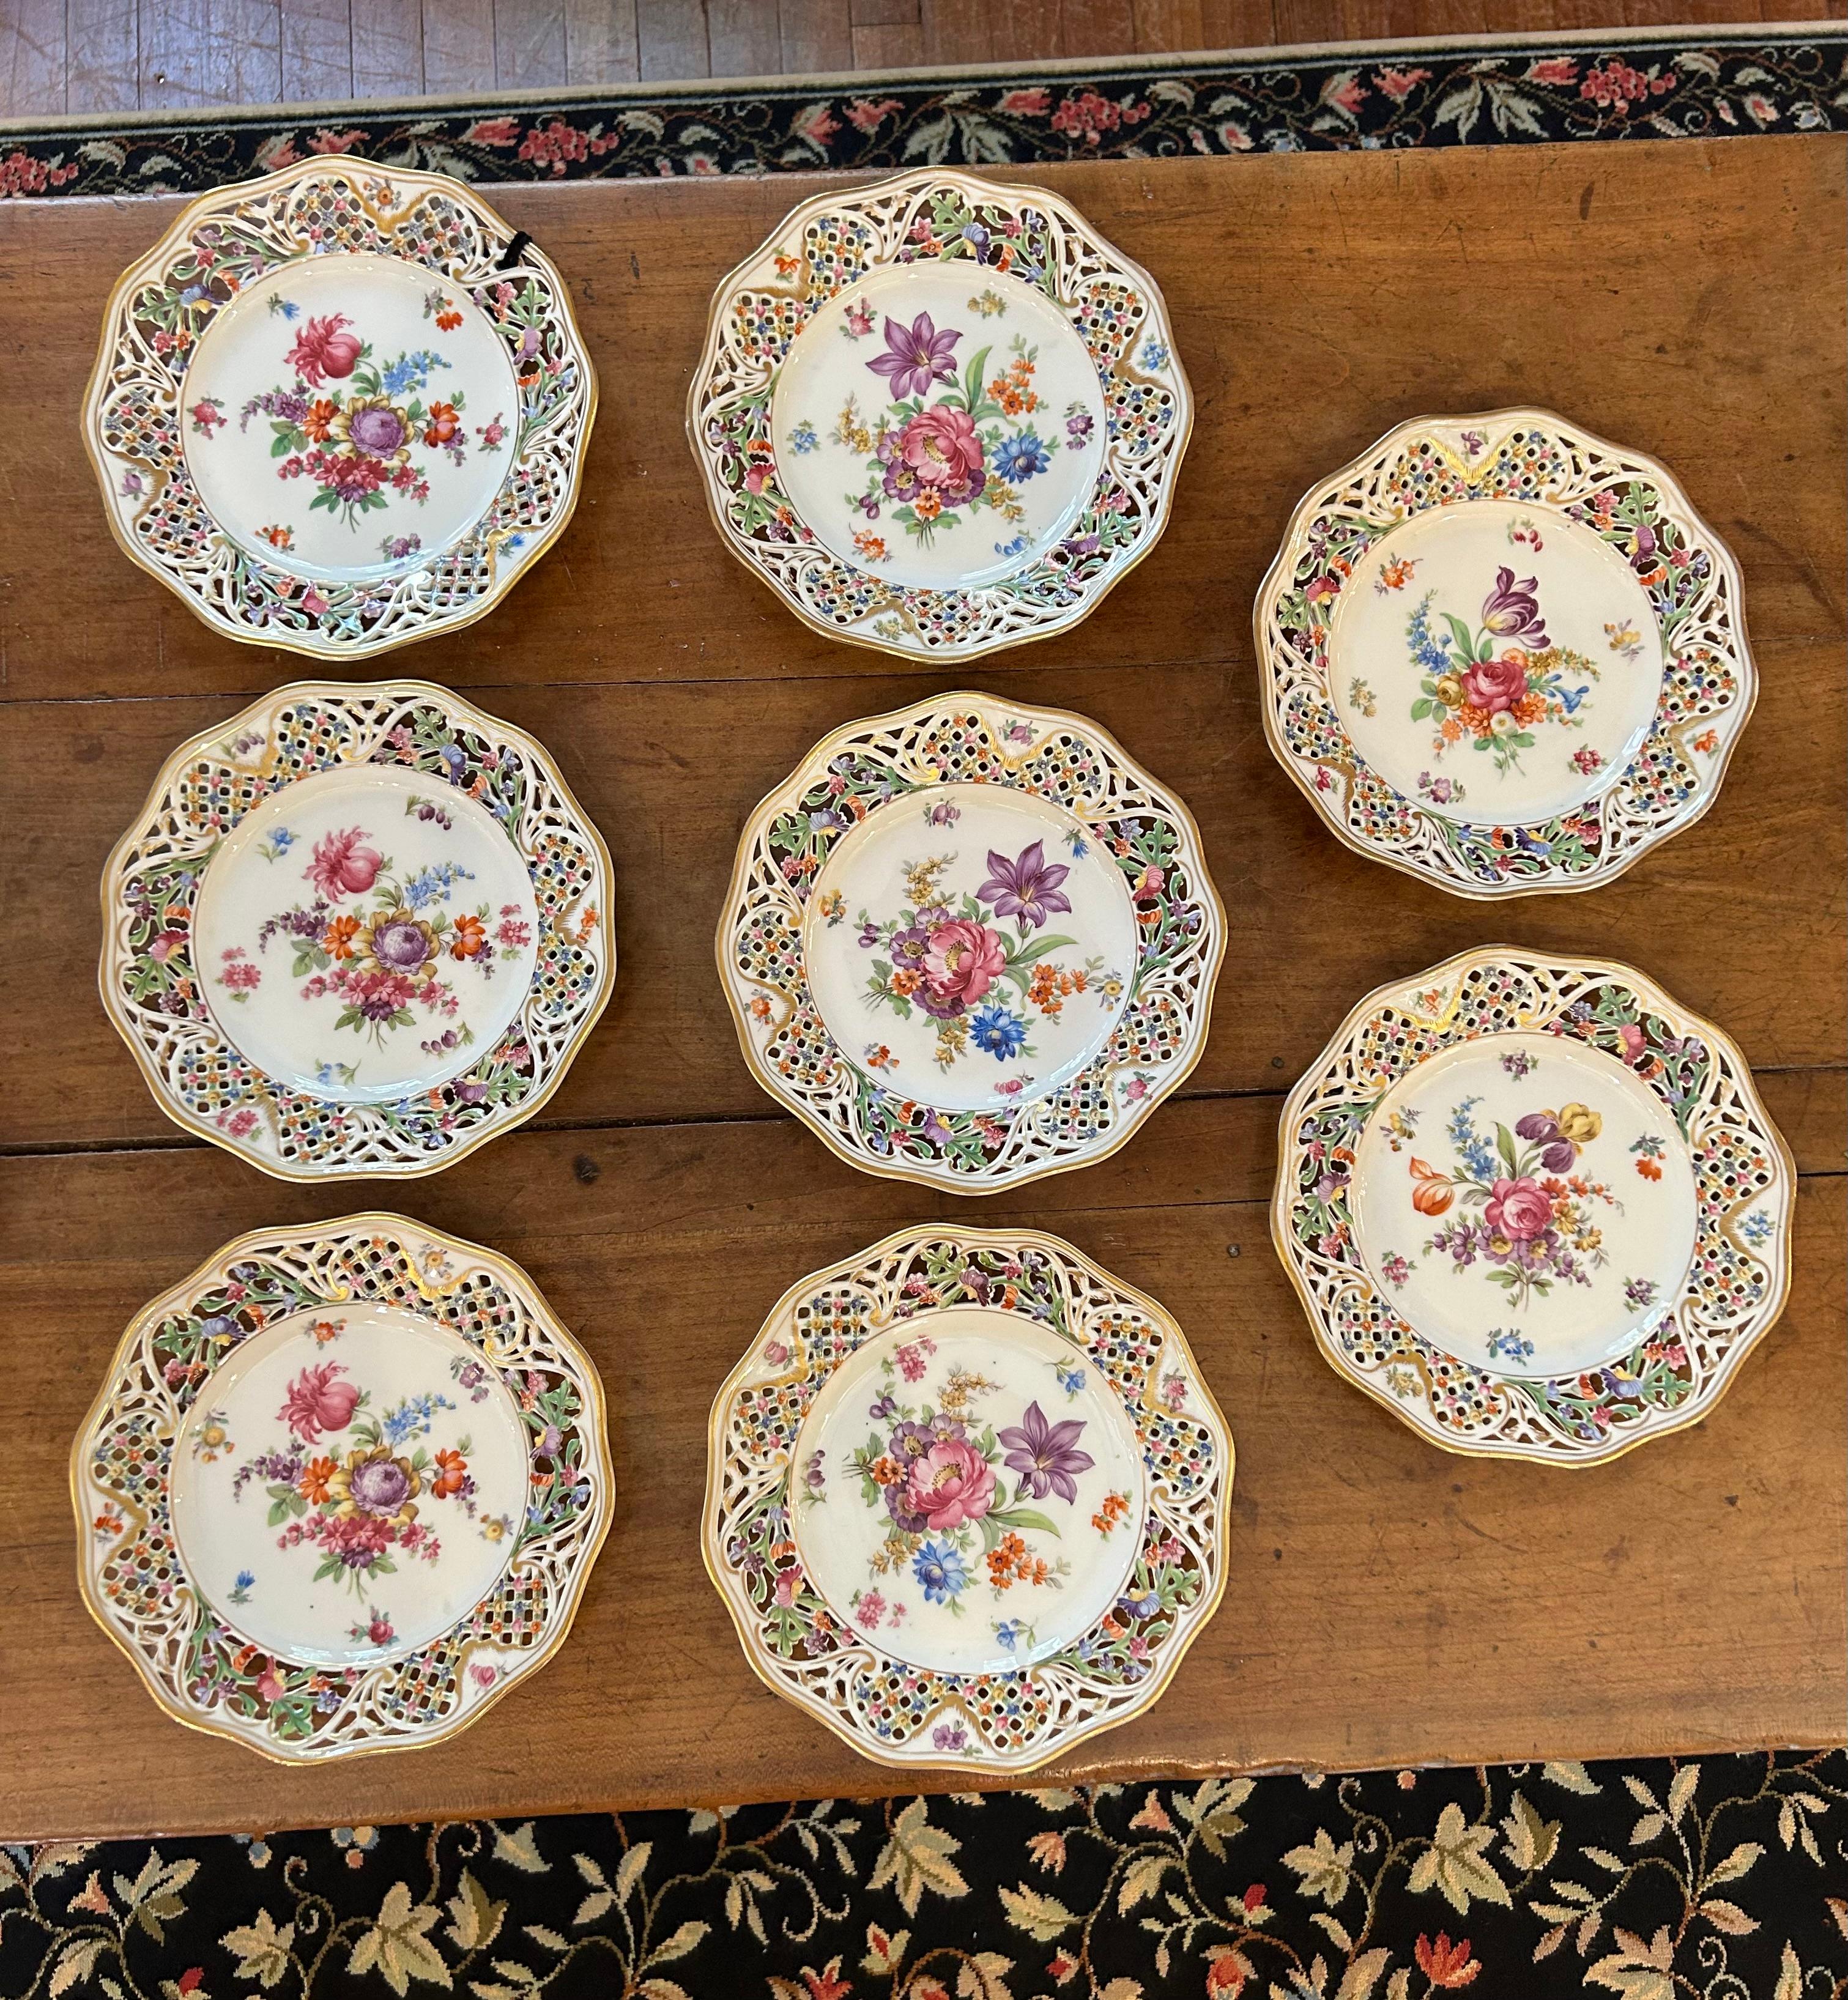 1932-1944 Set of 8 Dessert Plates by Schumann, Dresden & Bavaria periods For Sale 4